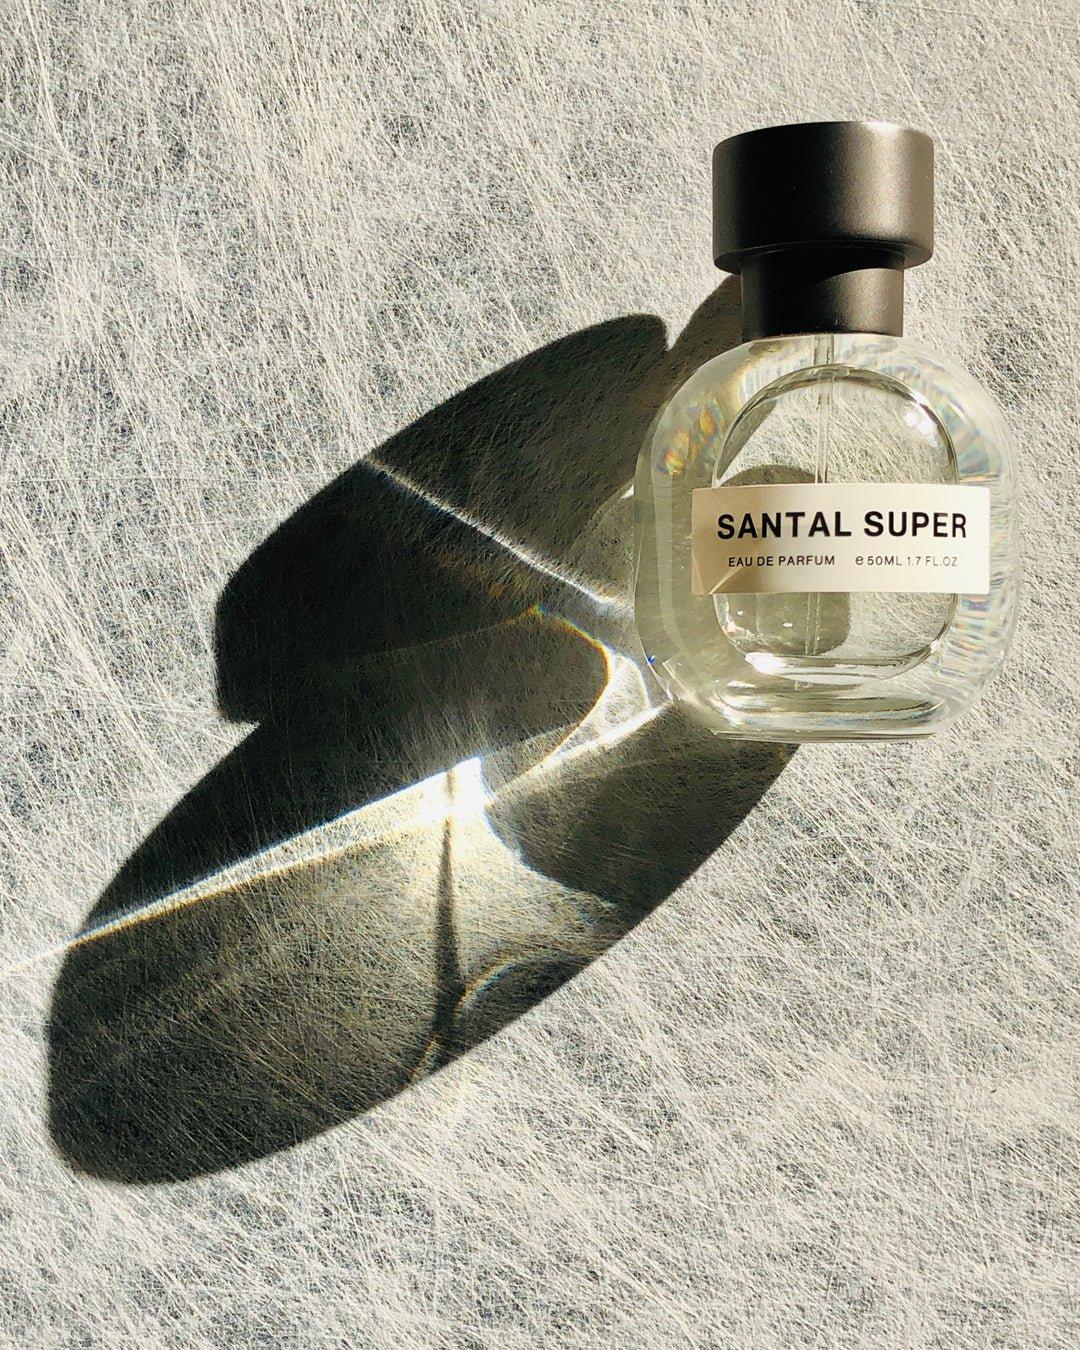 Son Venïn's Santal Super Parfum from Norway - APODEP